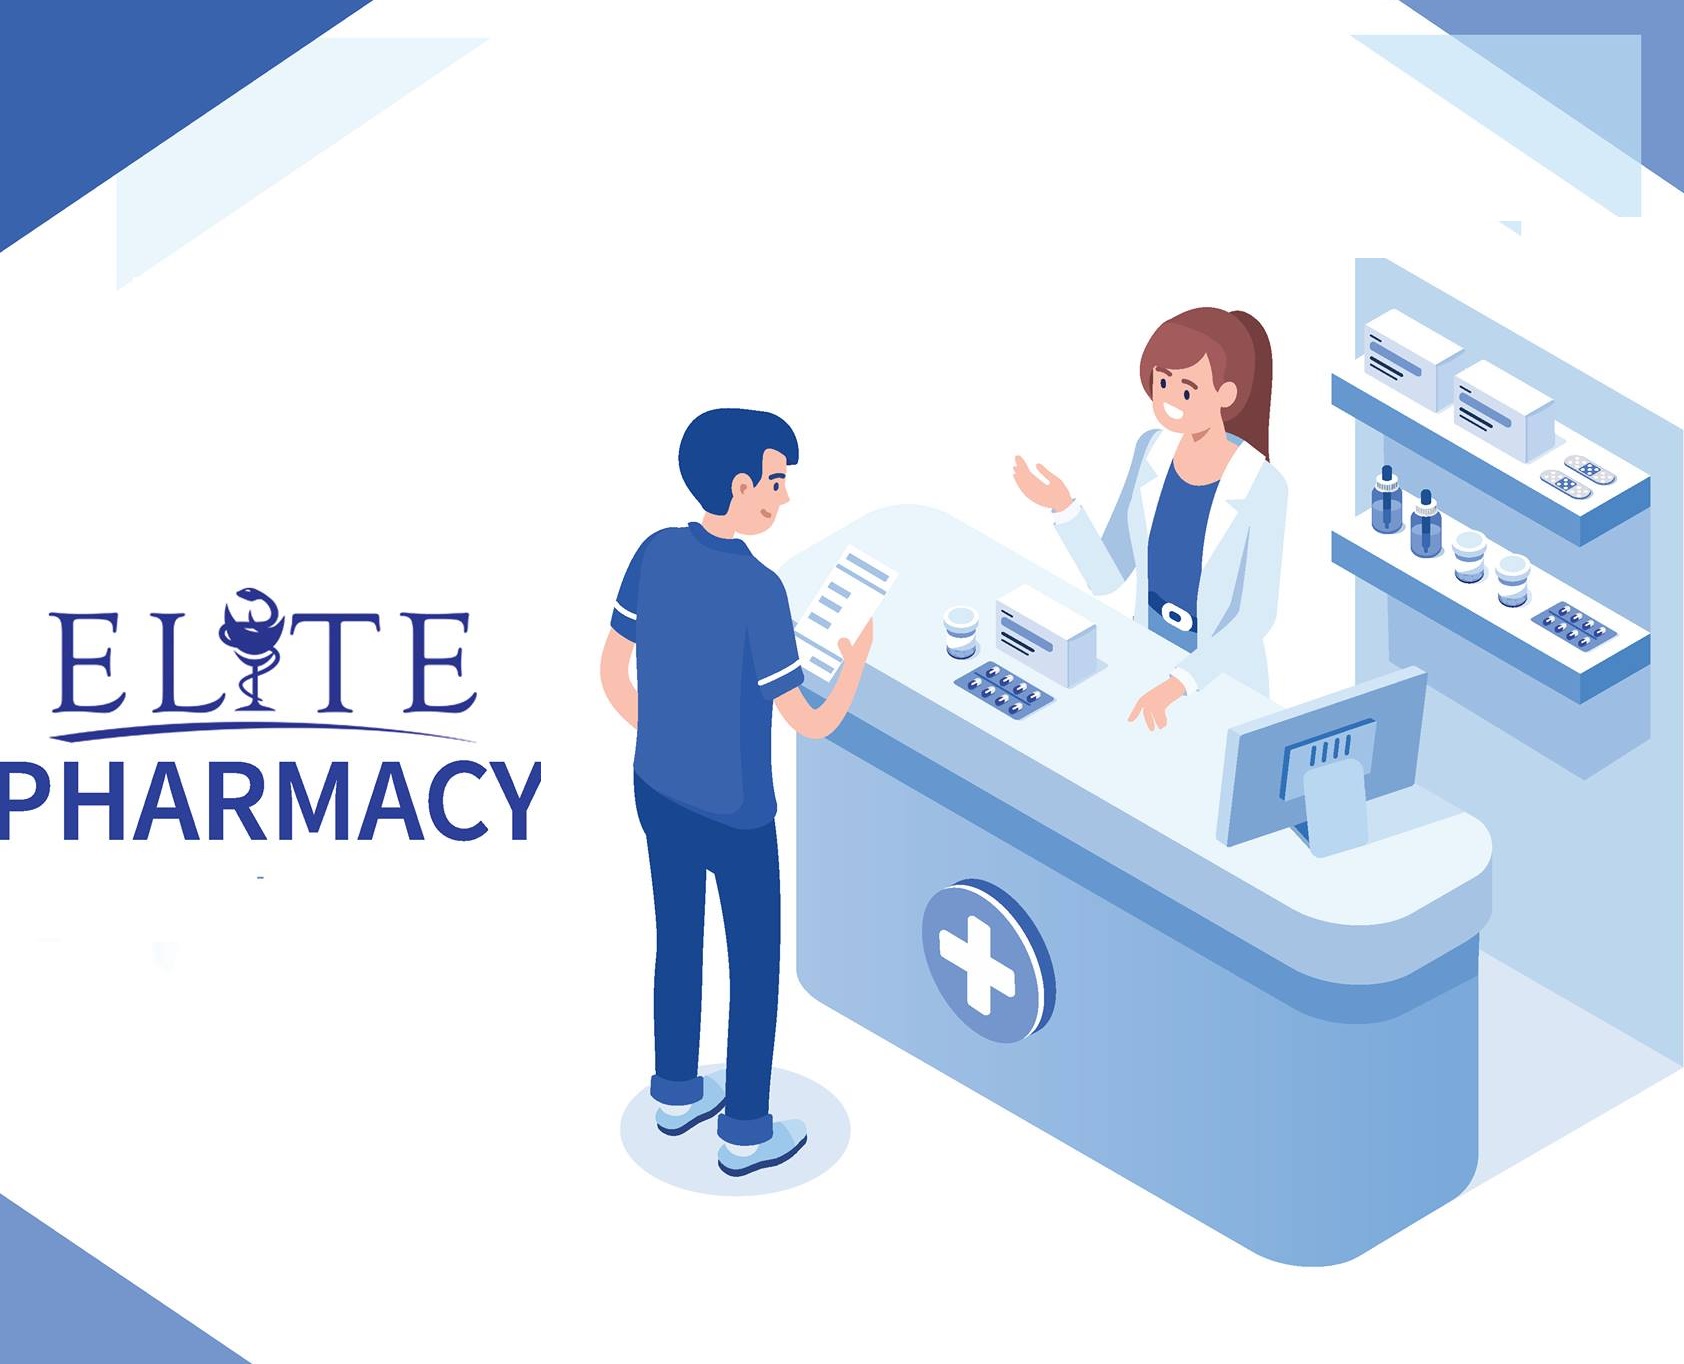 Elite Pharmacies